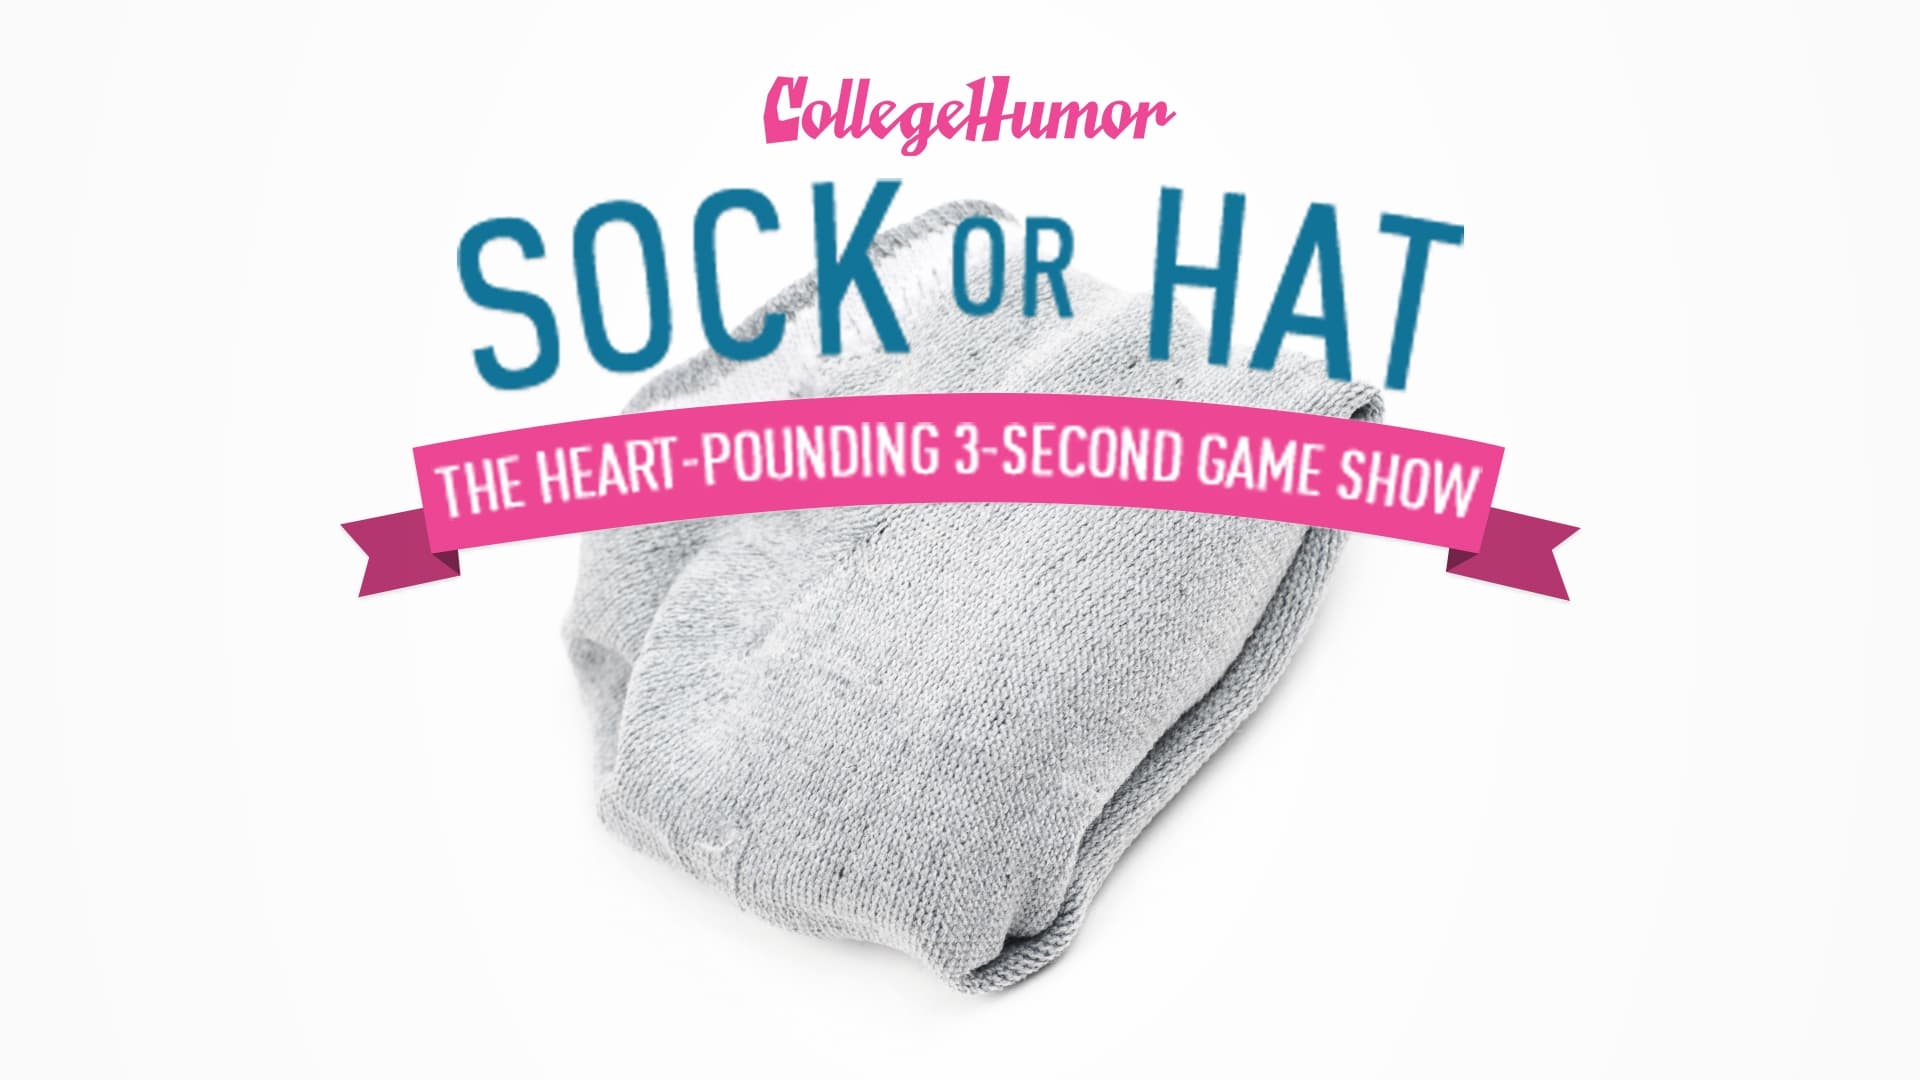 Sock or Hat?